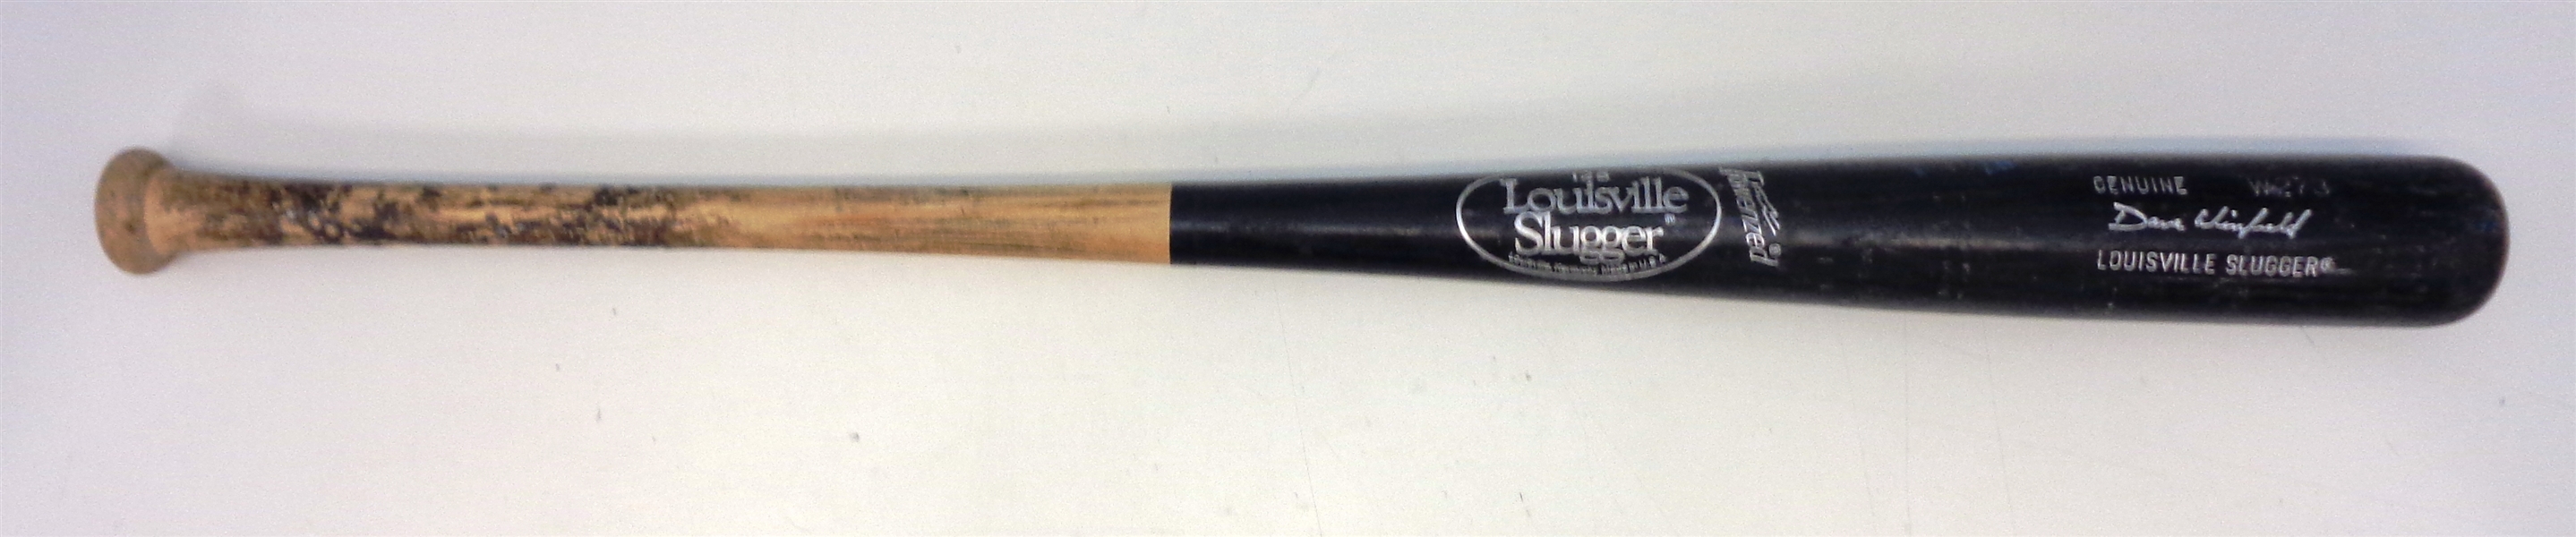 Dave Winfield Game Used Louisville Slugger Bat